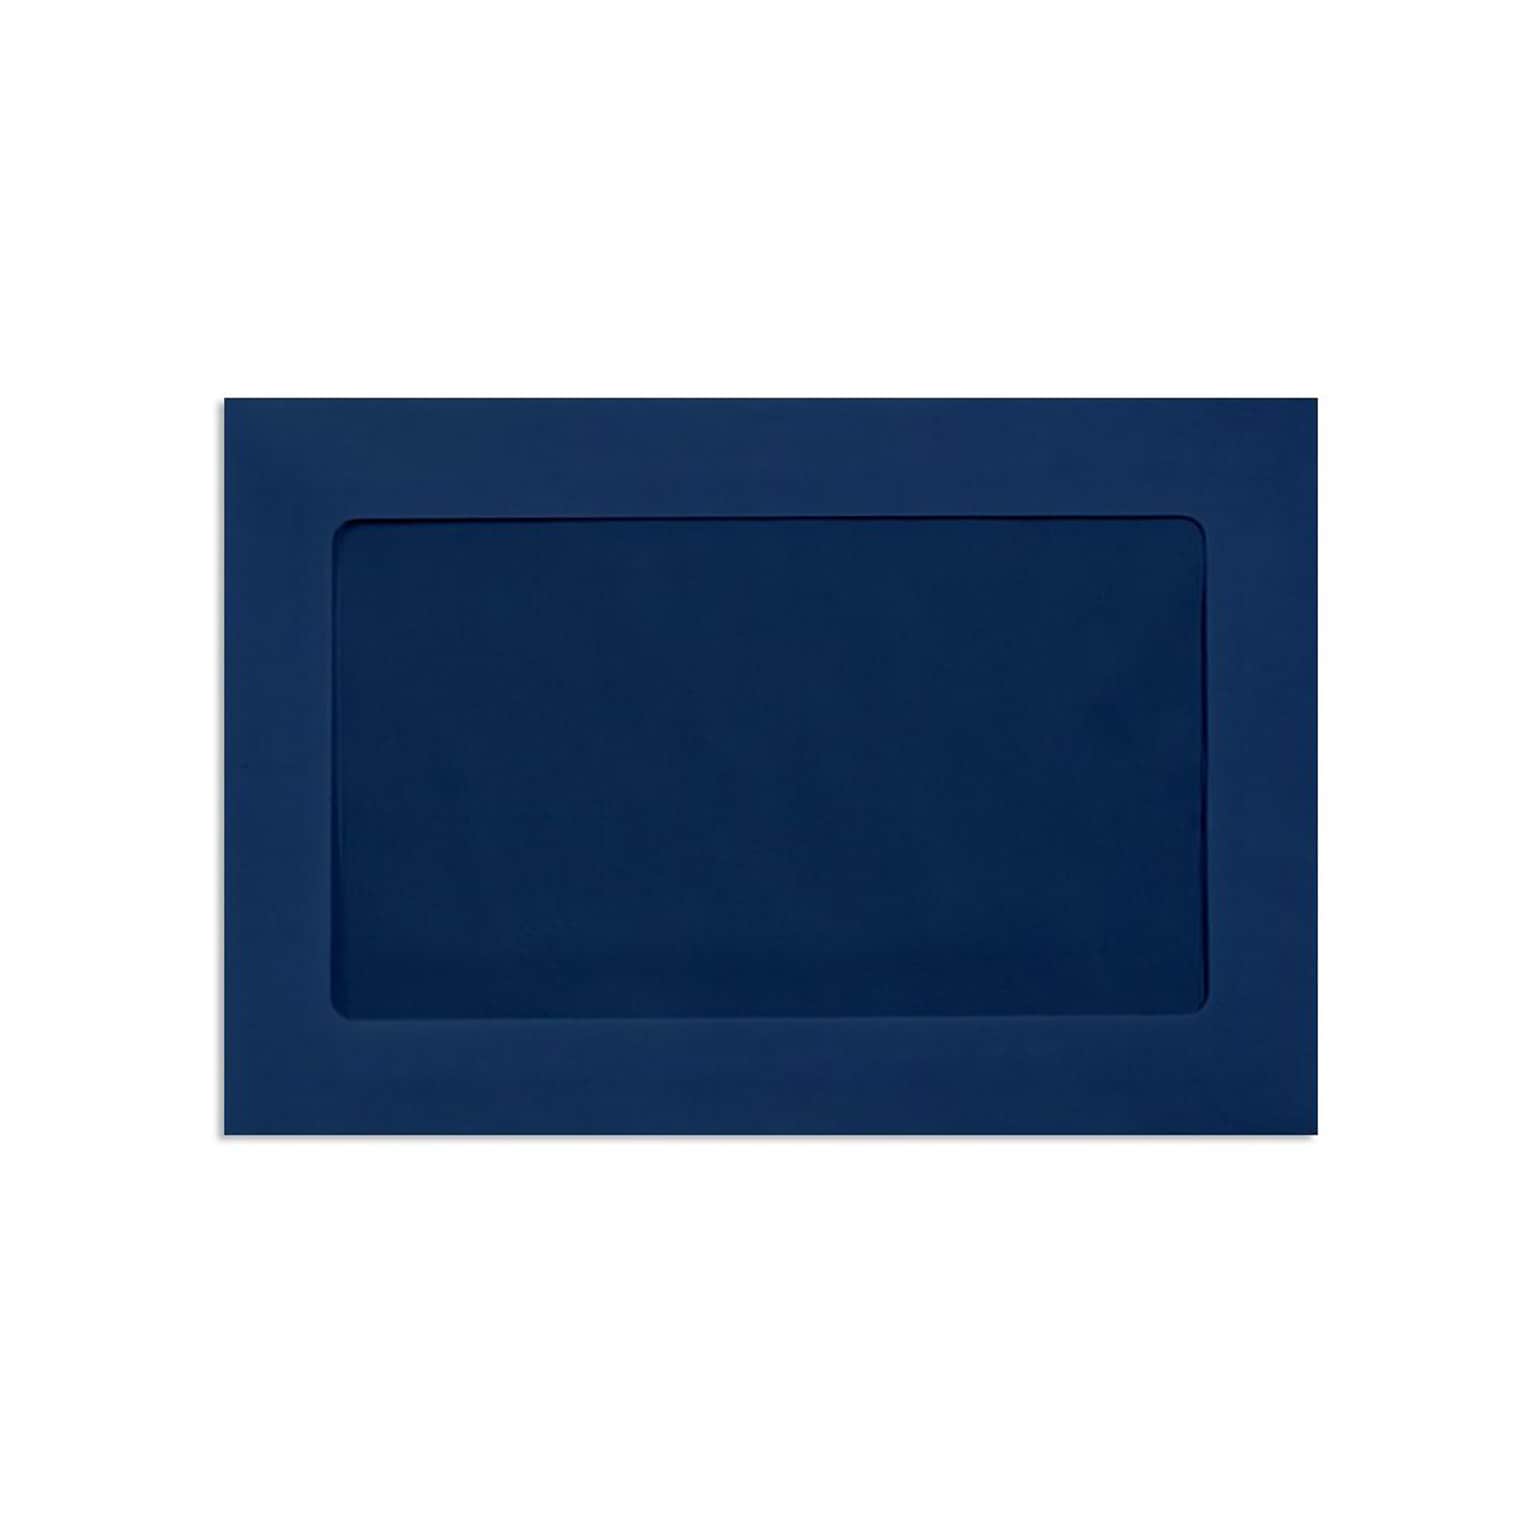 LUX Moistenable Glue #1 Window Envelope, 6 x 9, Navy Blue, 1000/Pack (FFW-69-103-1000)